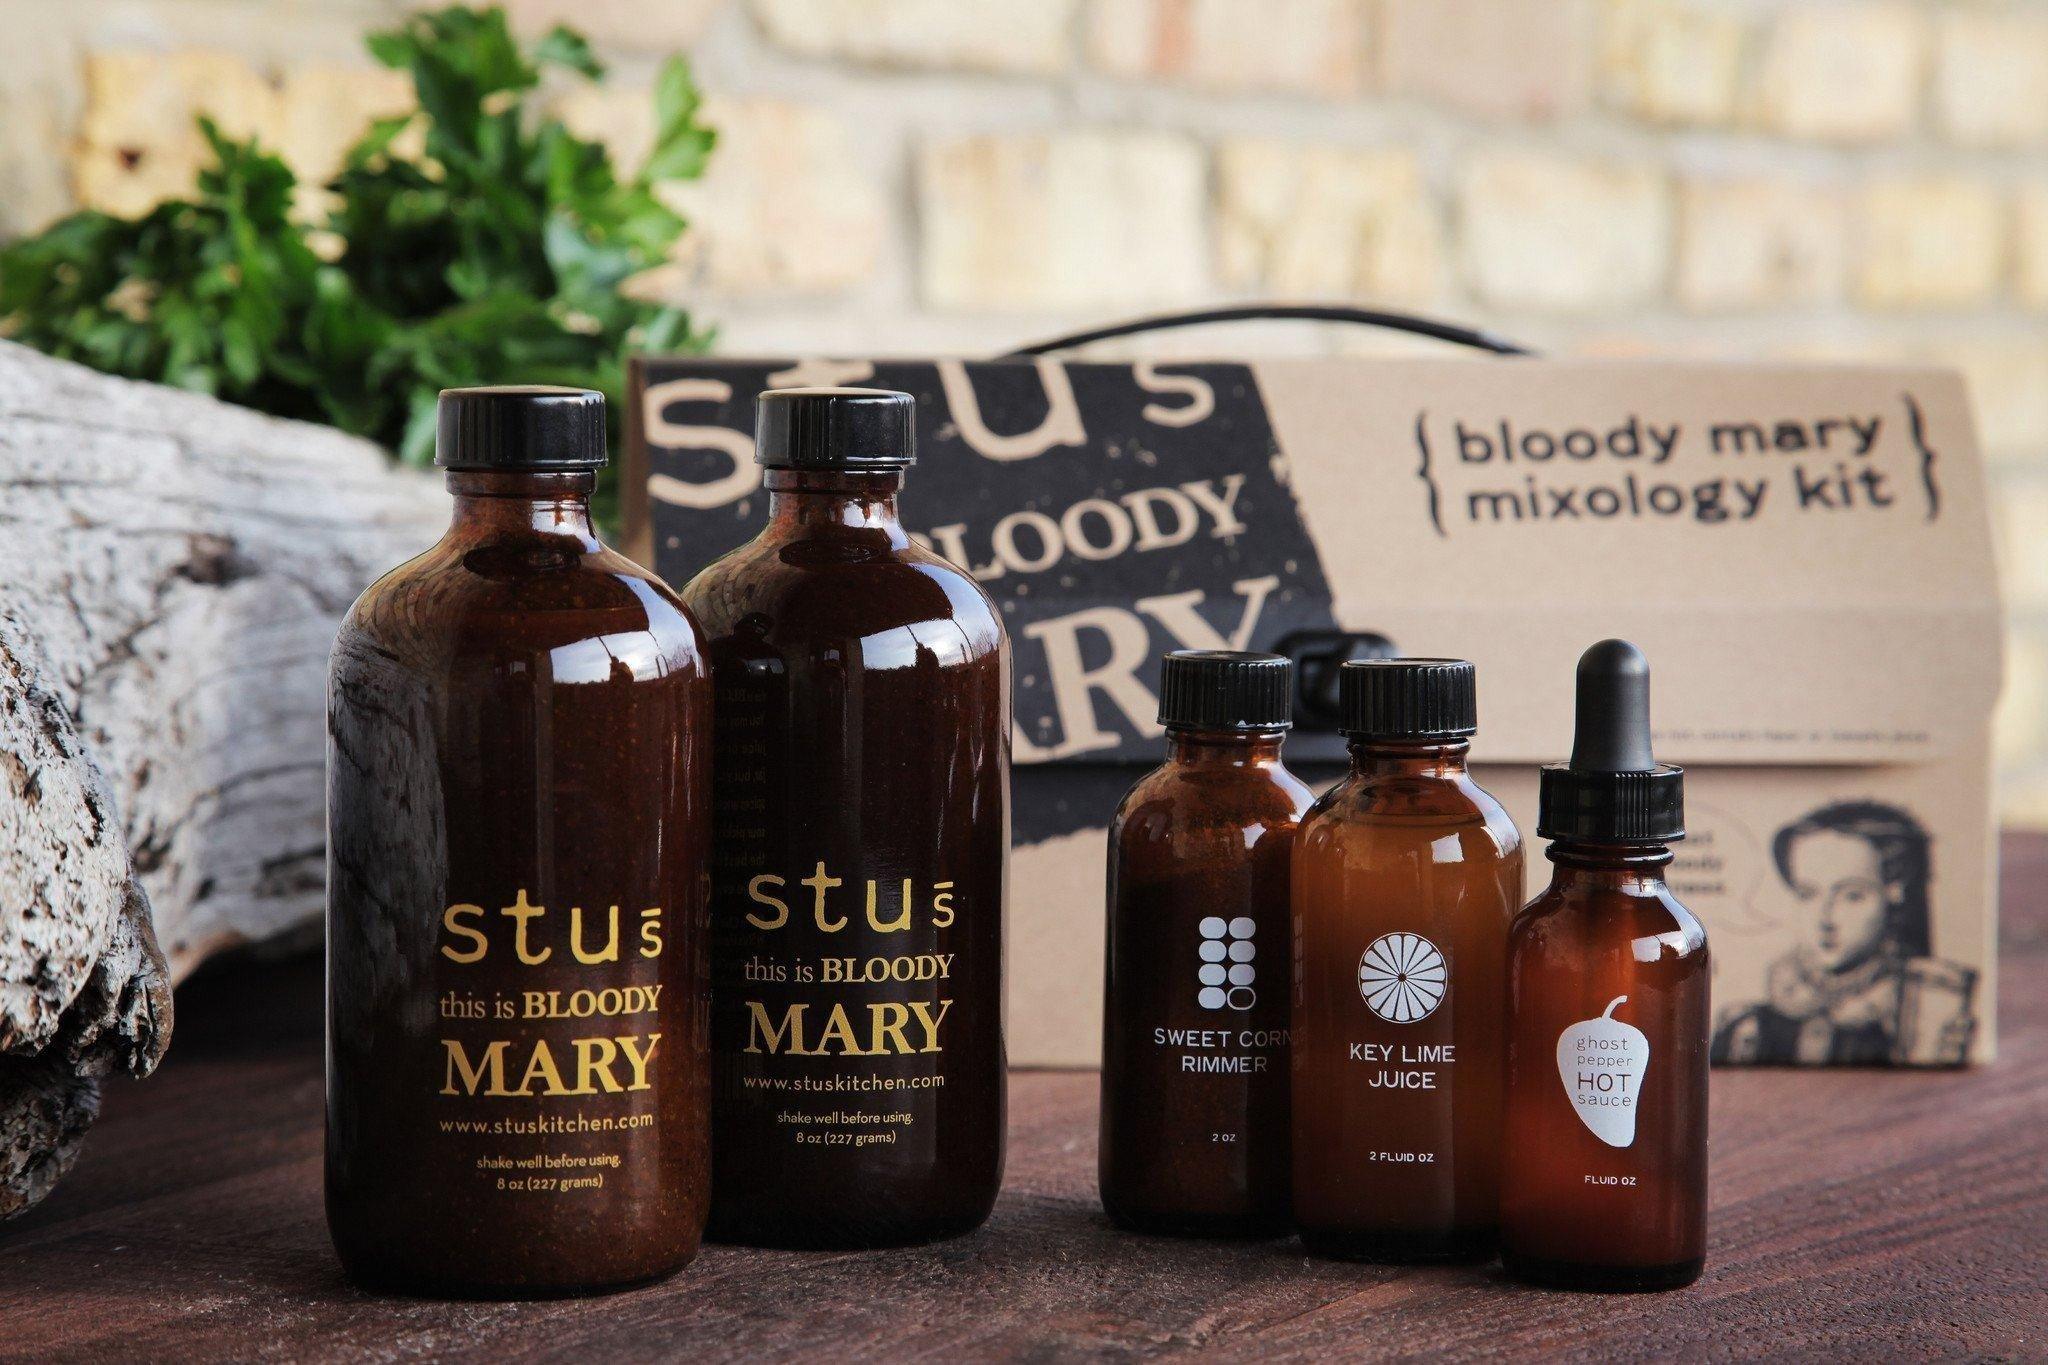 Bloody Mary Mix - Stu's Bloody Mary Mixology Kit